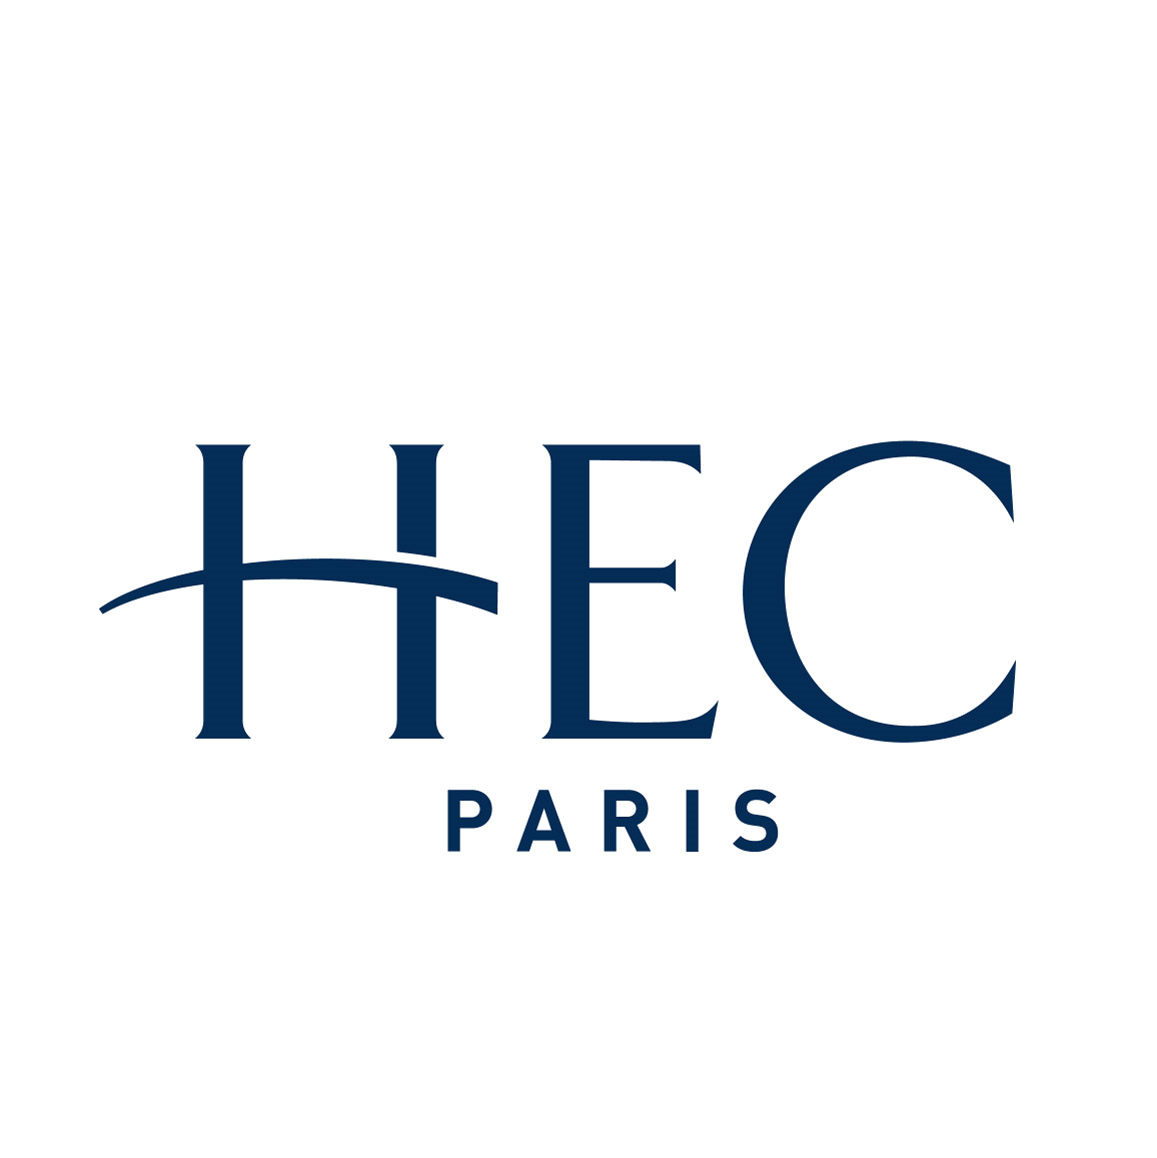 HEC Paris Blue with transparent back